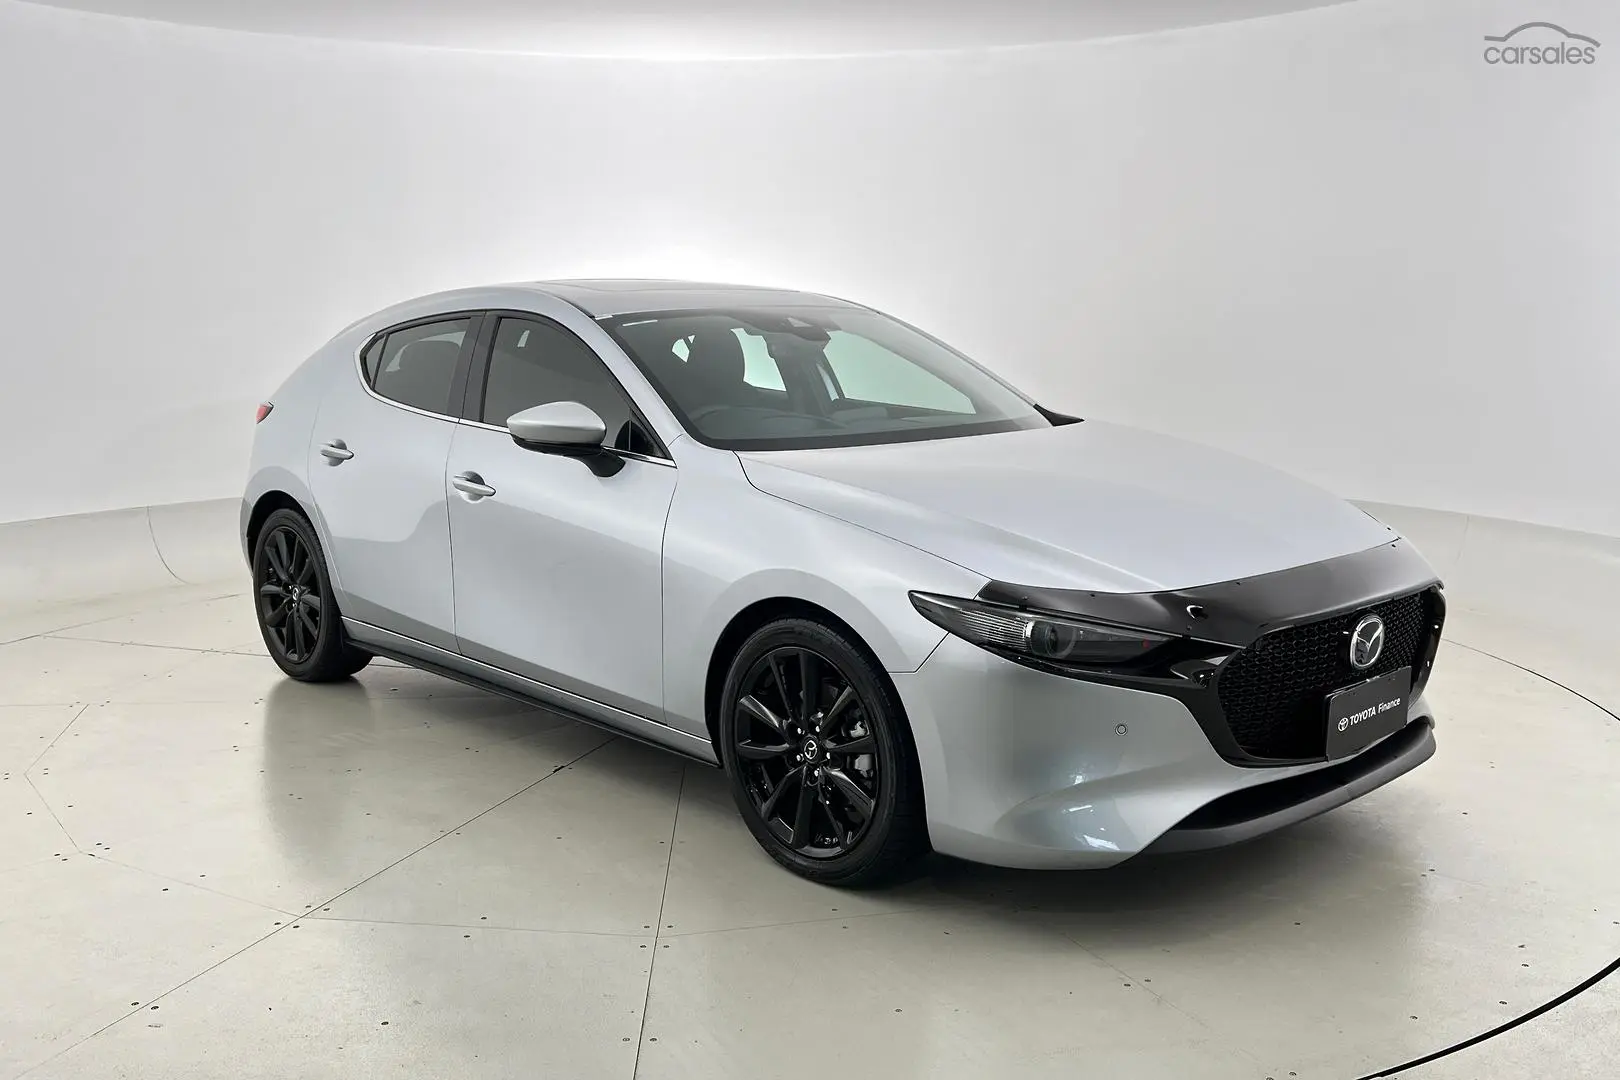 2019 Mazda 3 Image 1